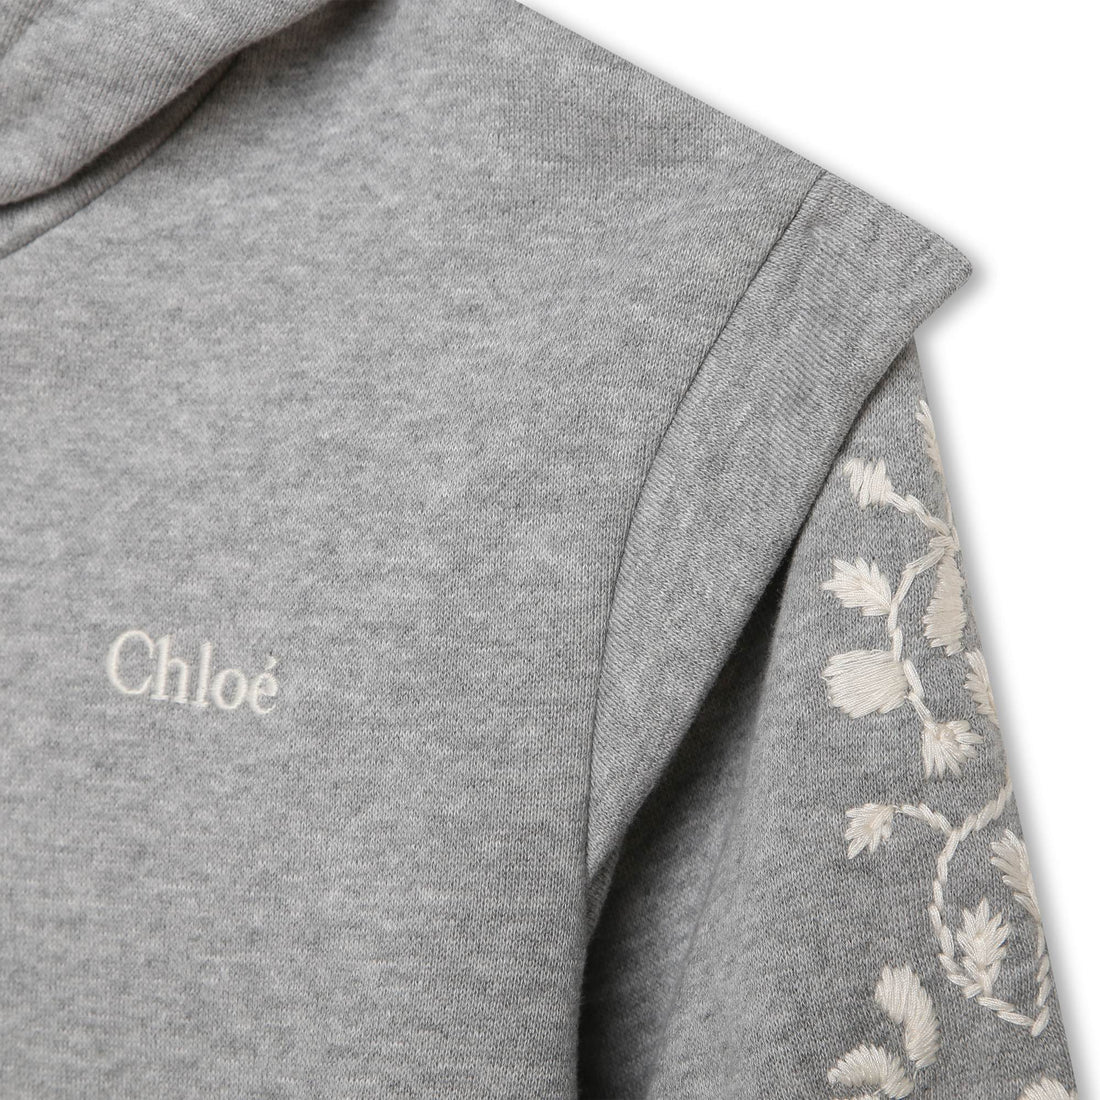 Chloe Hooded Dress Style: C12932